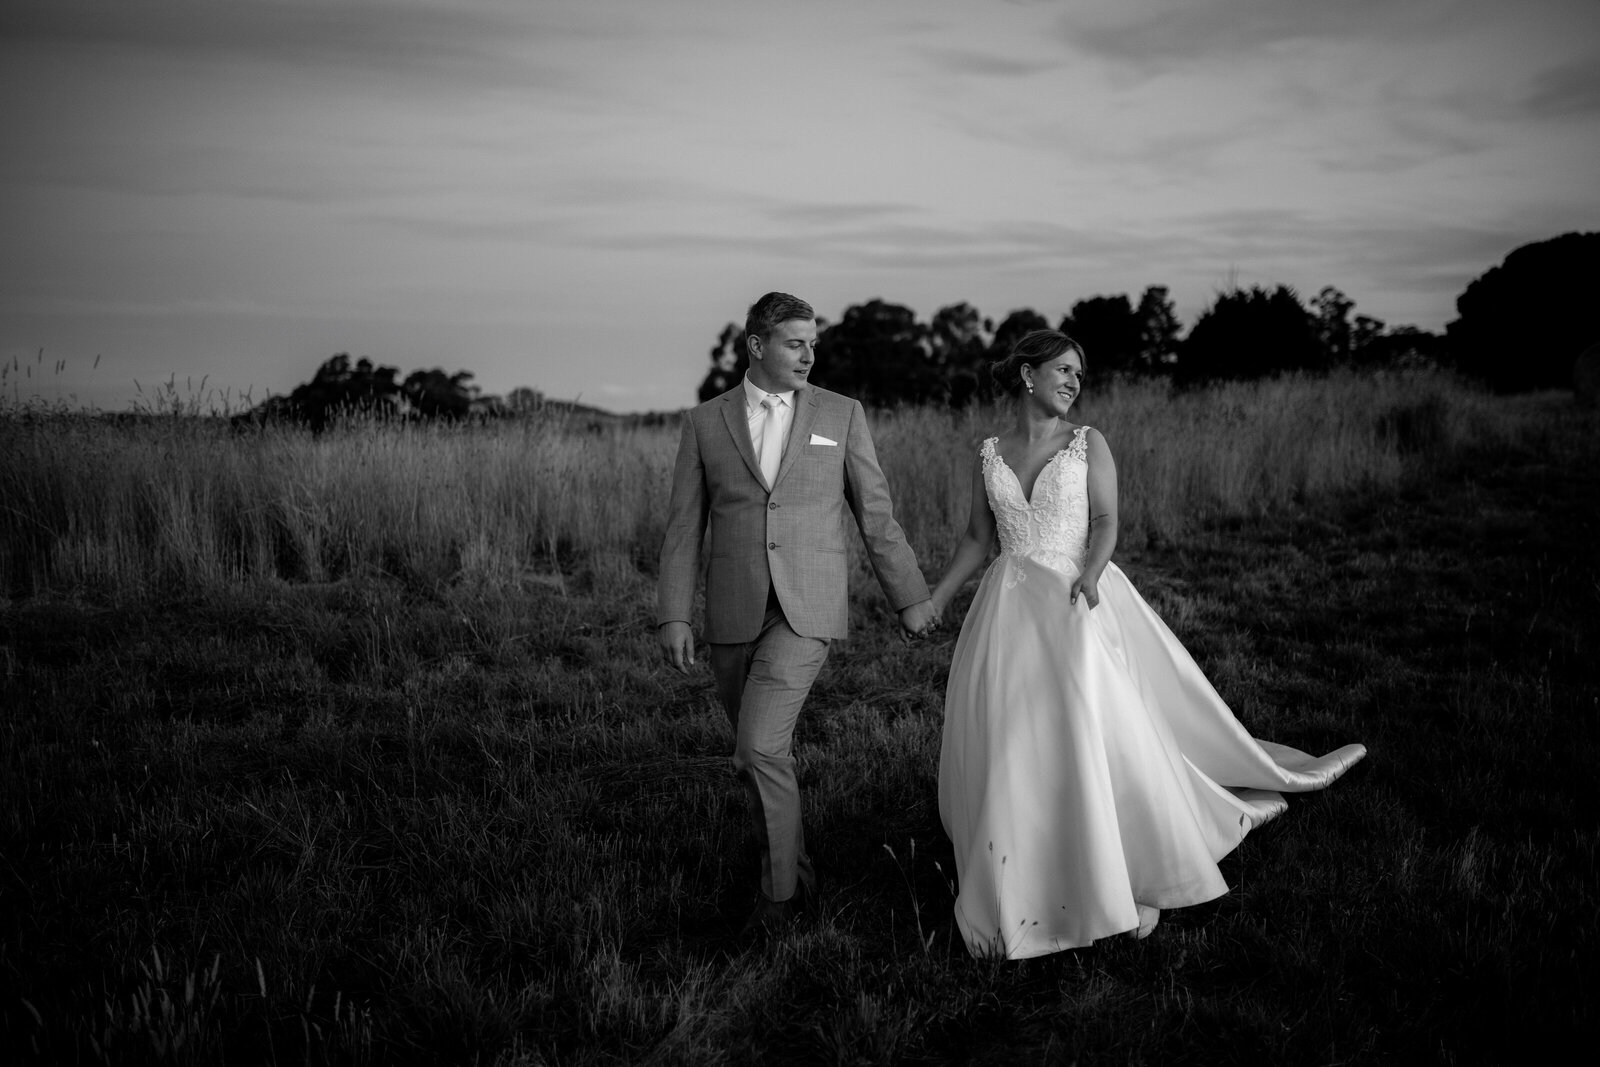 Rosie-Tom-Rexvil-Photography-Adelaide-Wedding-Photographer-837